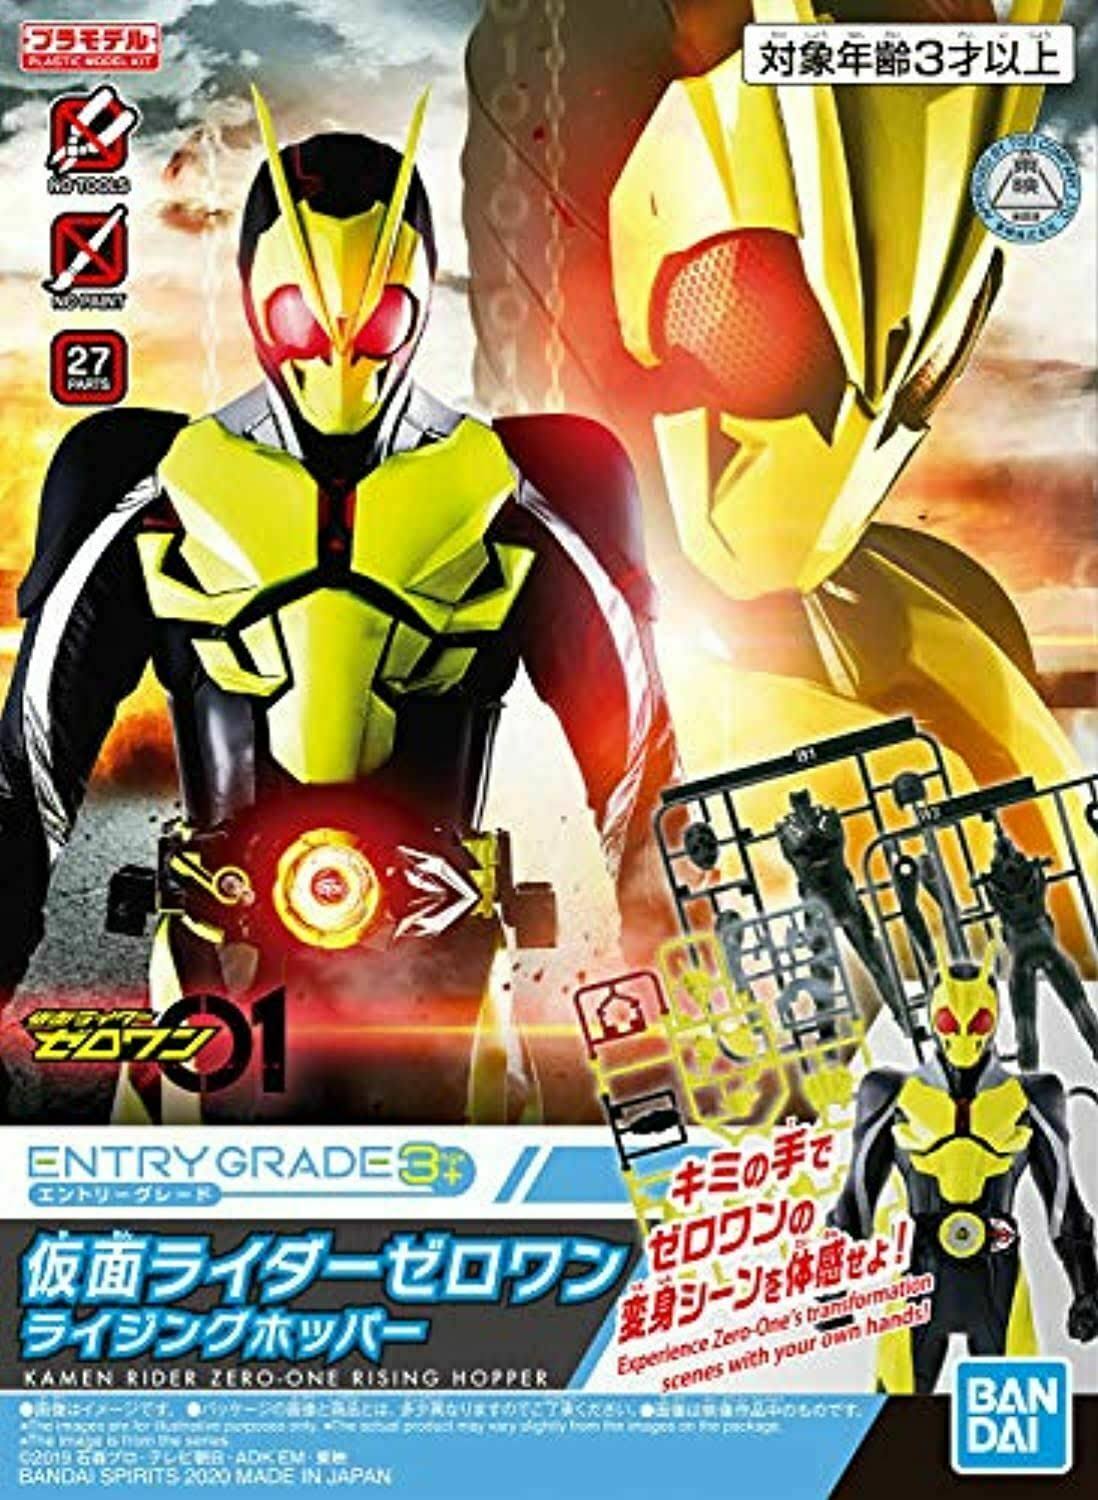 Bandai Entry Grade 01 Kamen Rider Zero-One Rising Hopper